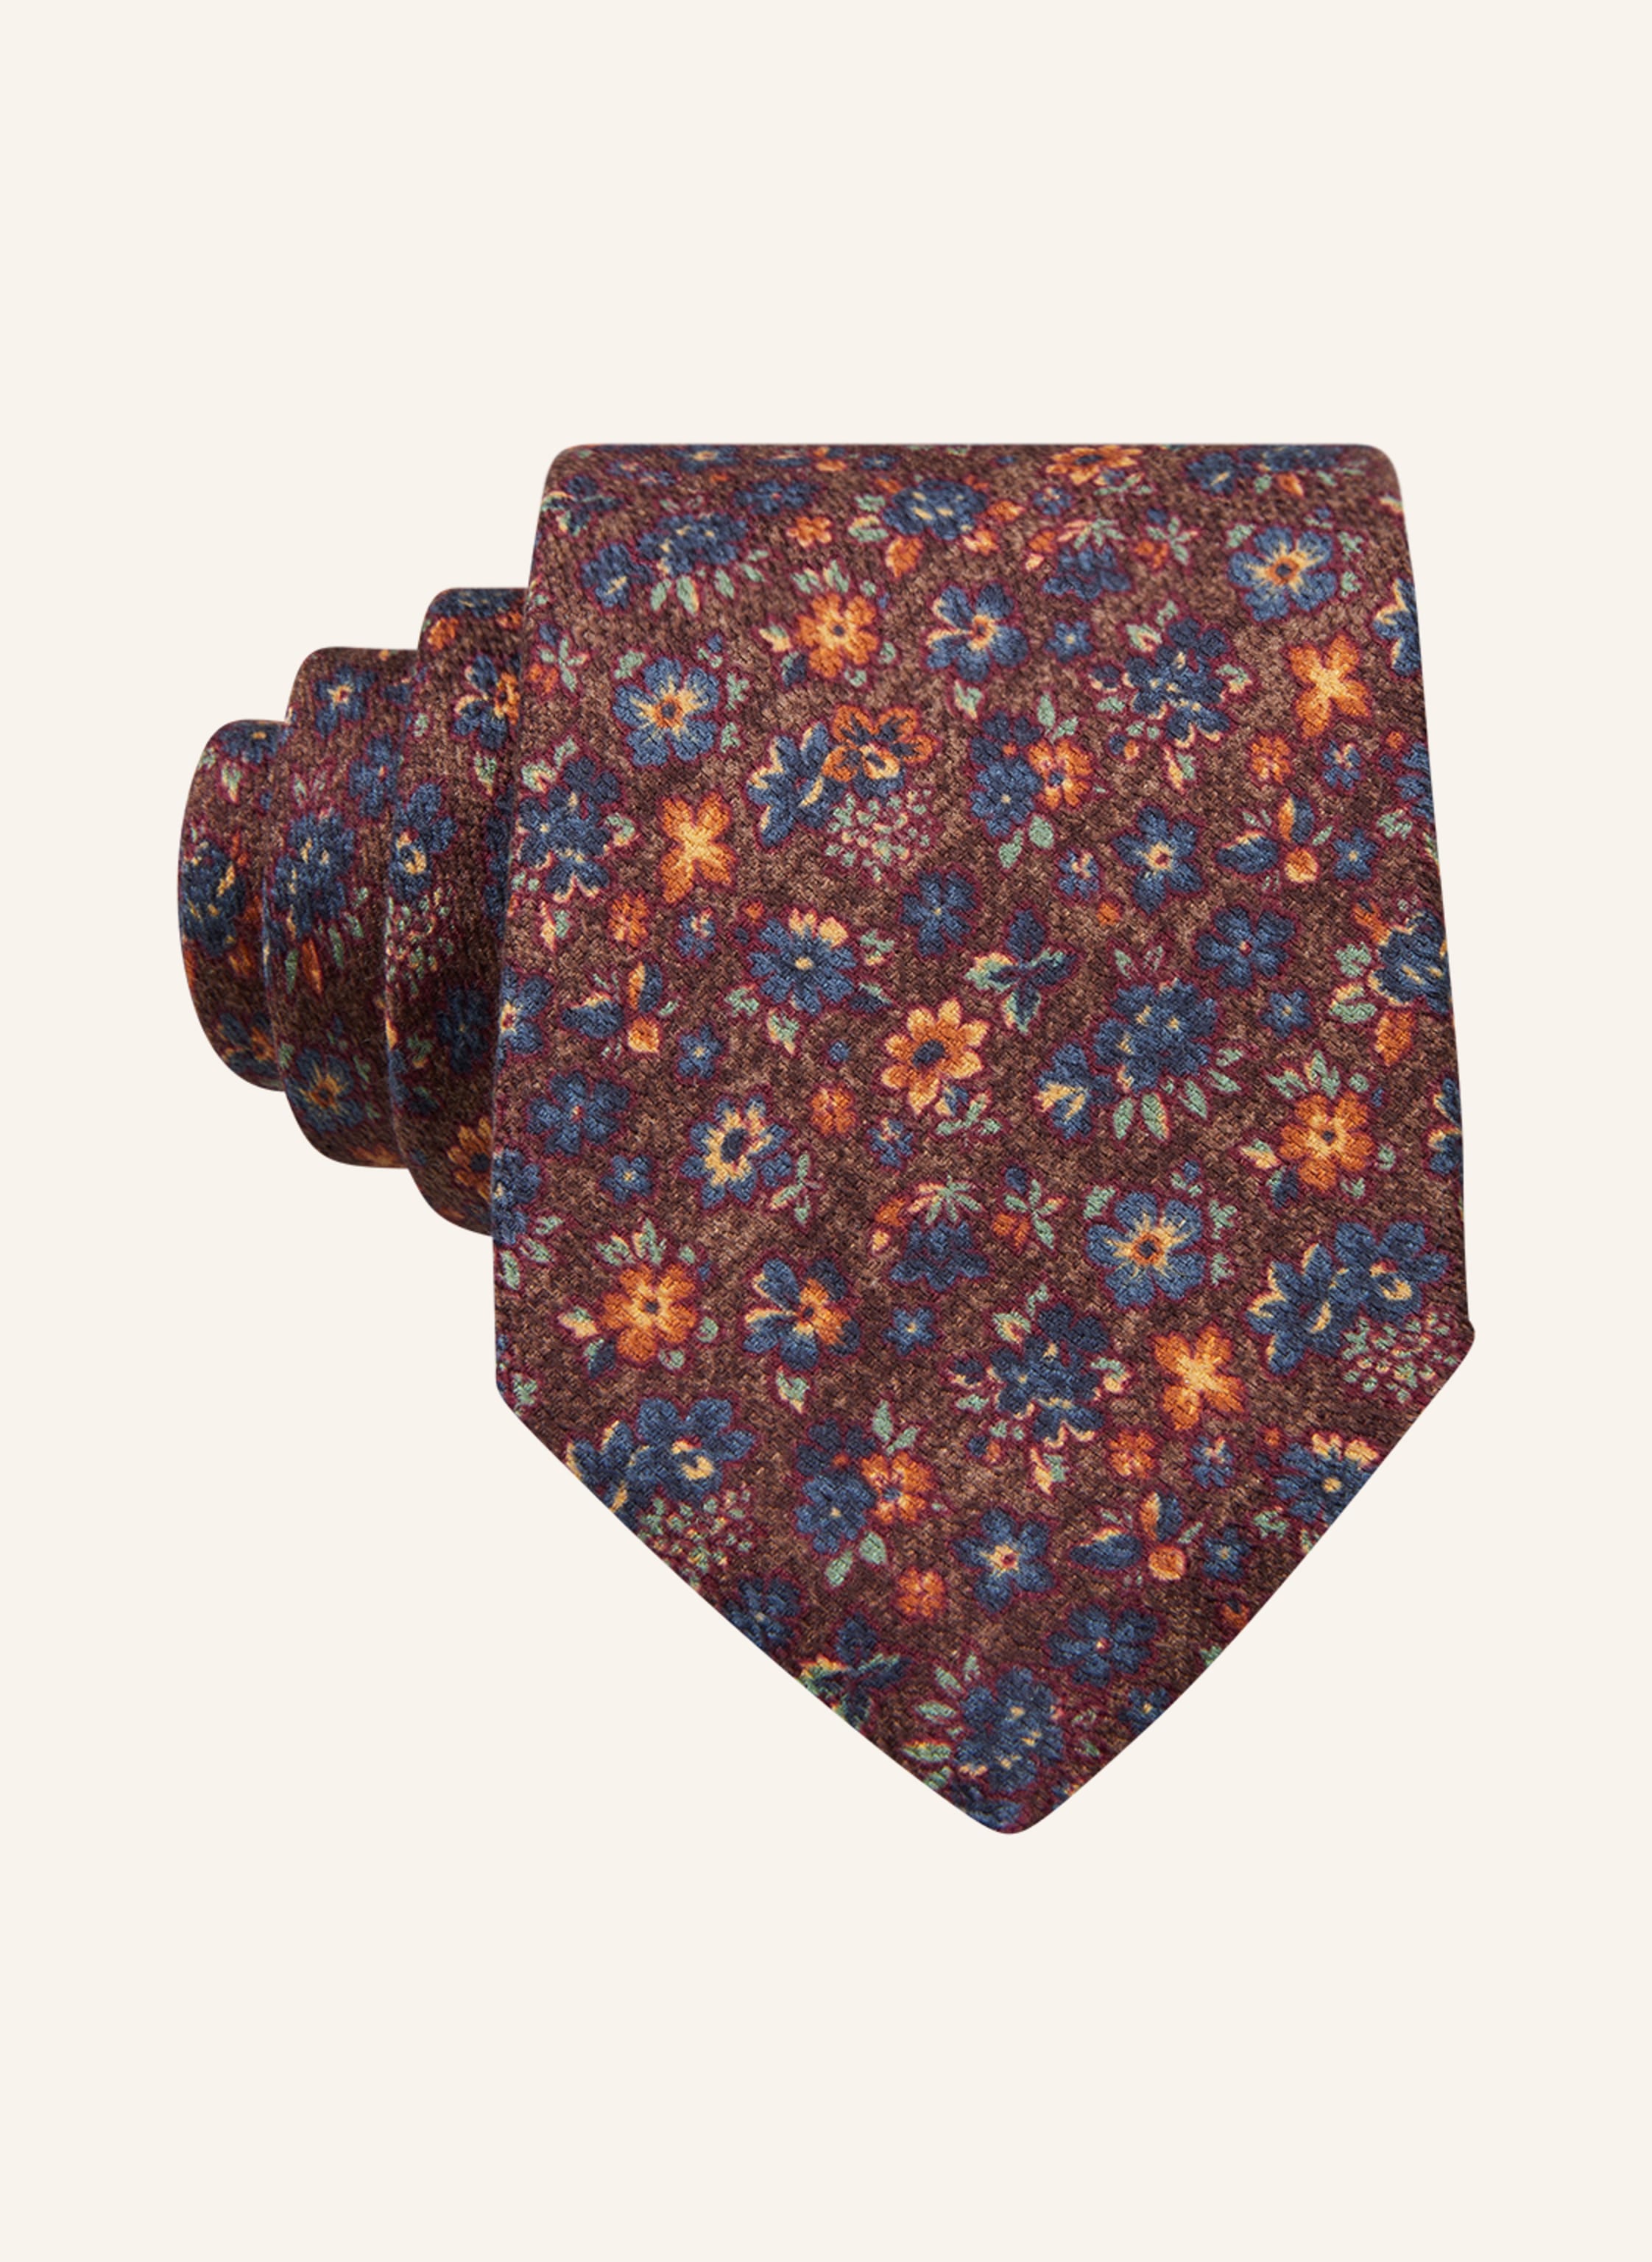 Krawatte PAUL blau/ braun/ in orange